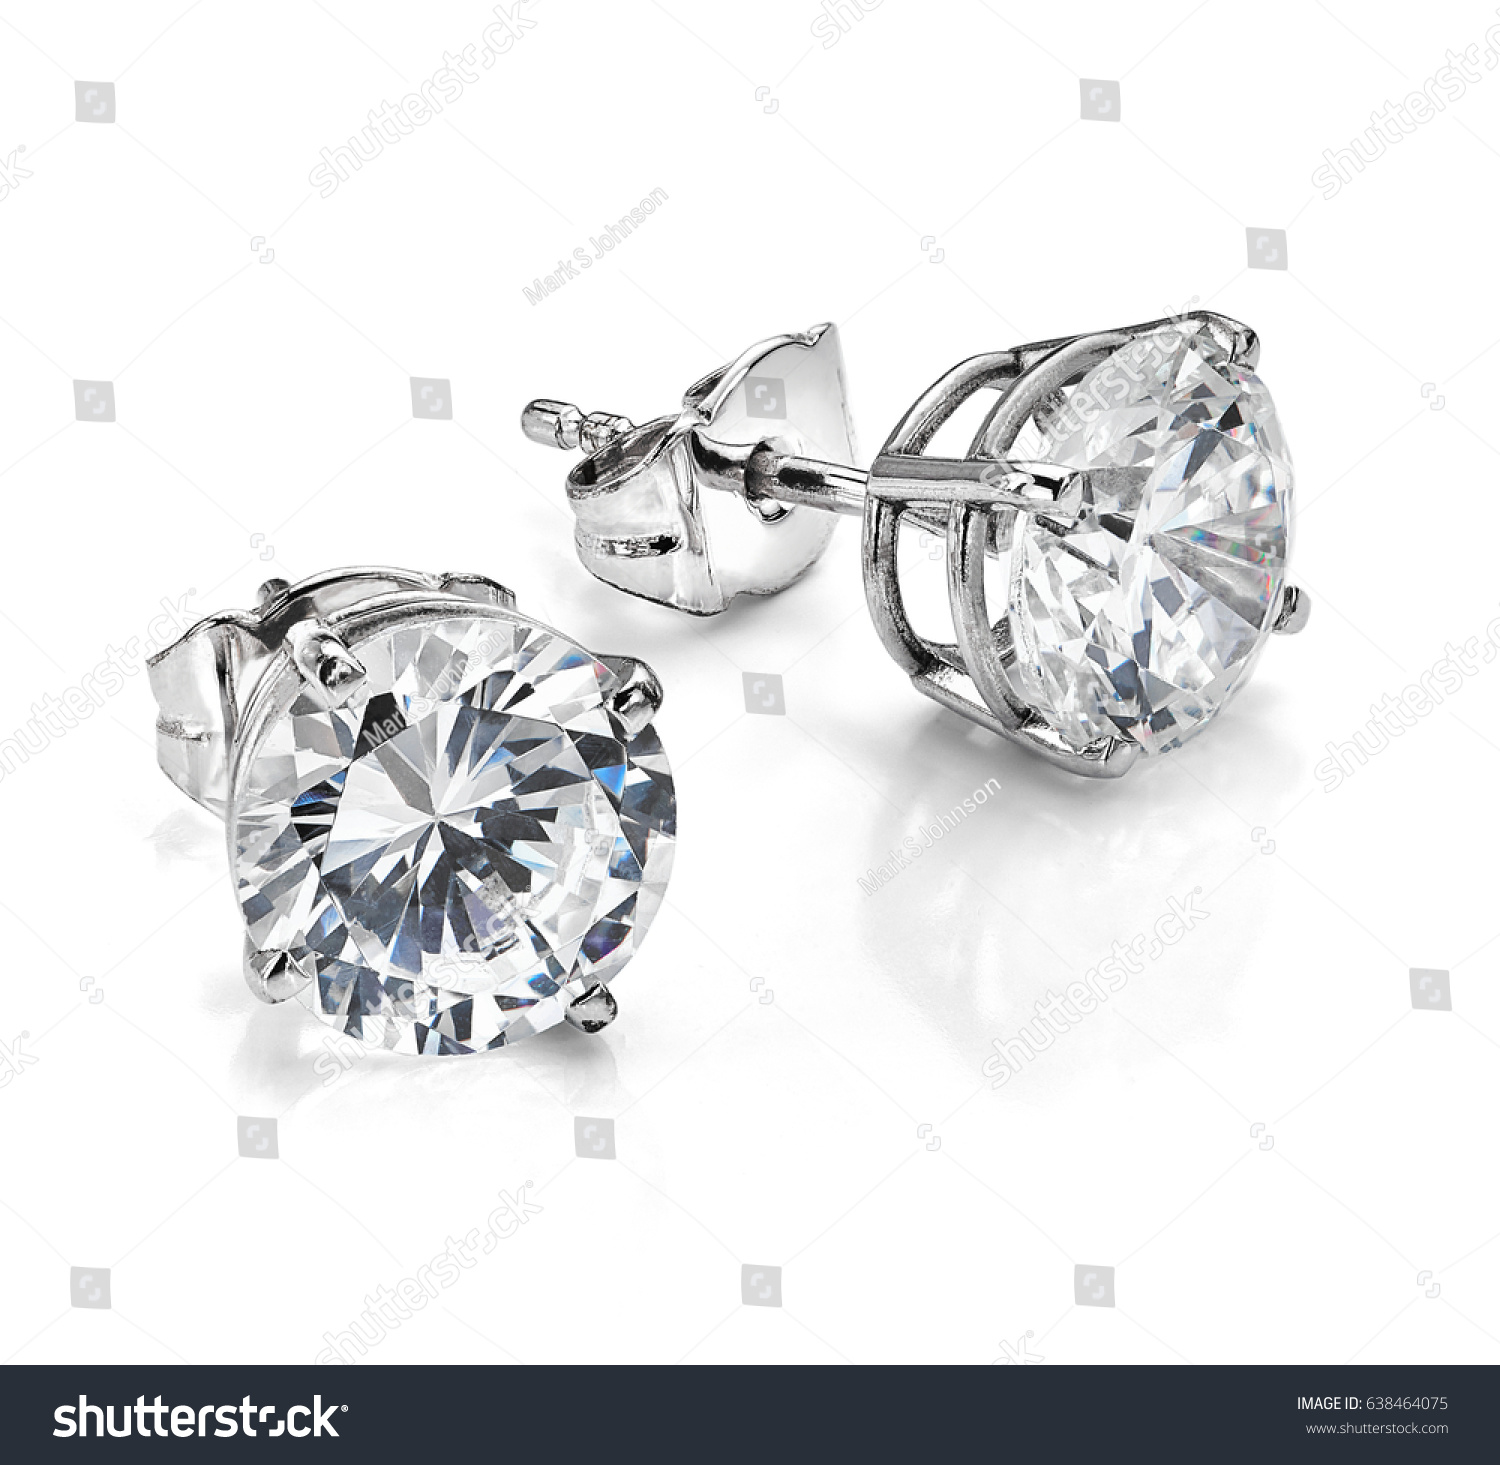 Diamond earrings. Big diamond earrings, large solitaire earrings on white background. Four prong, four claw diamond earrings with posts and backs. Round brilliant cut diamonds.  #638464075